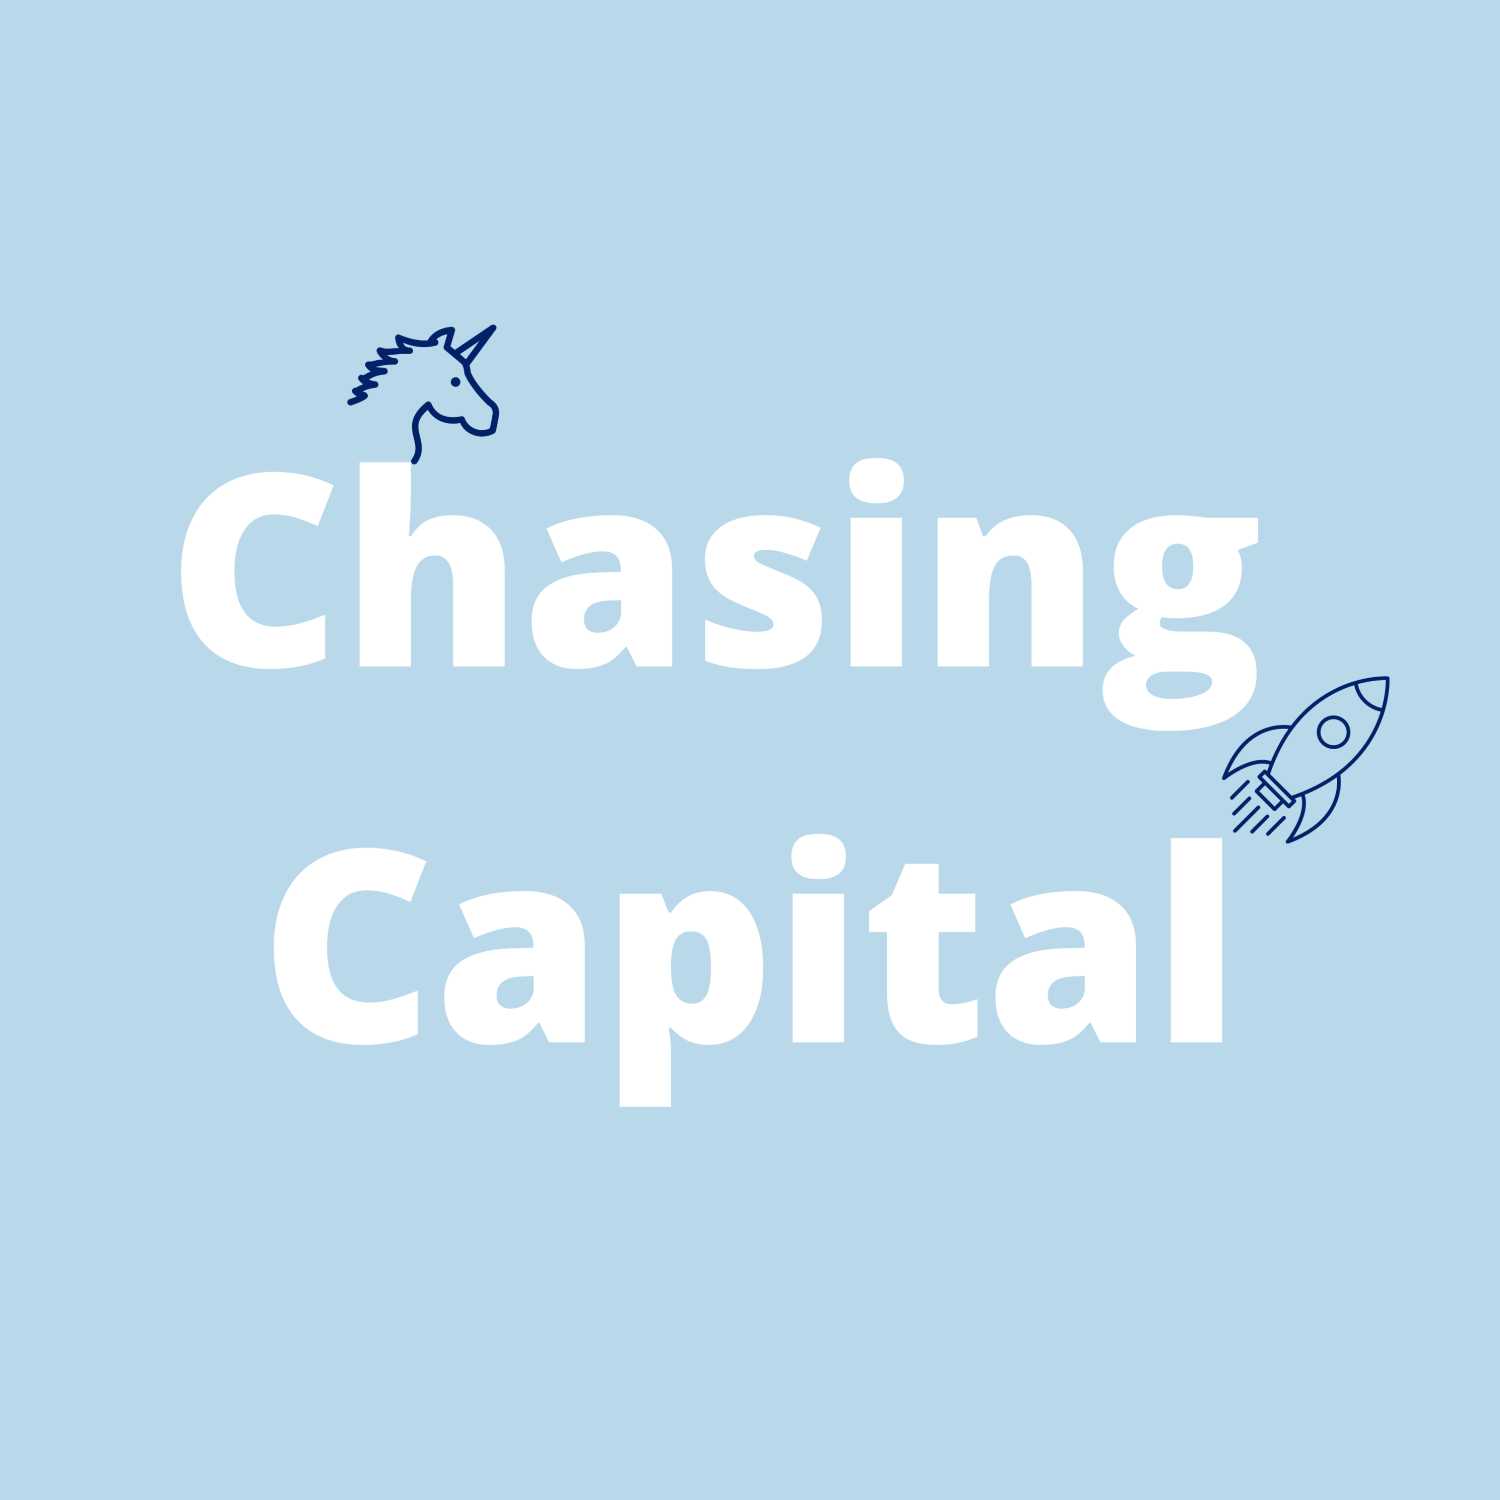 Chasing Capital